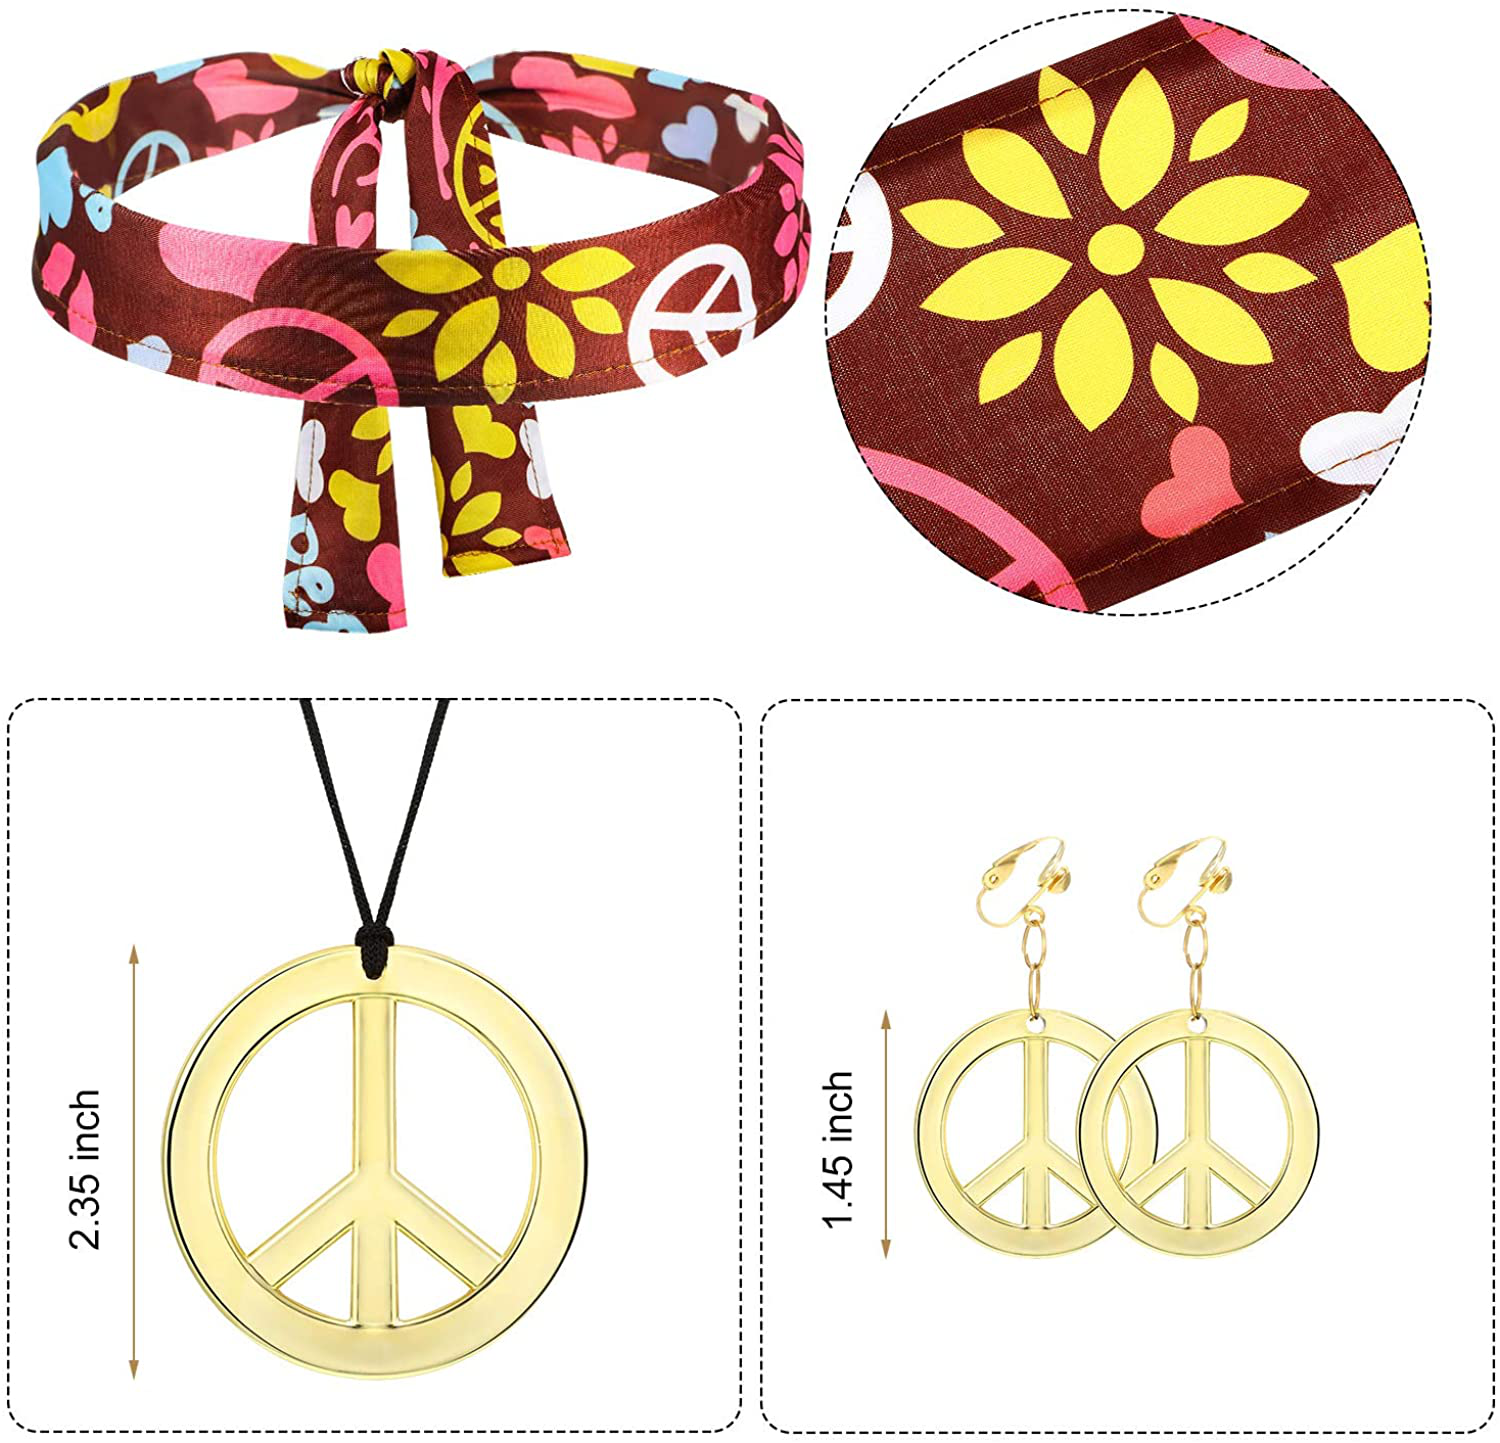 Hippie Peace Sign Earring Necklace Headband Dress Ankle Socks Women Costume Set